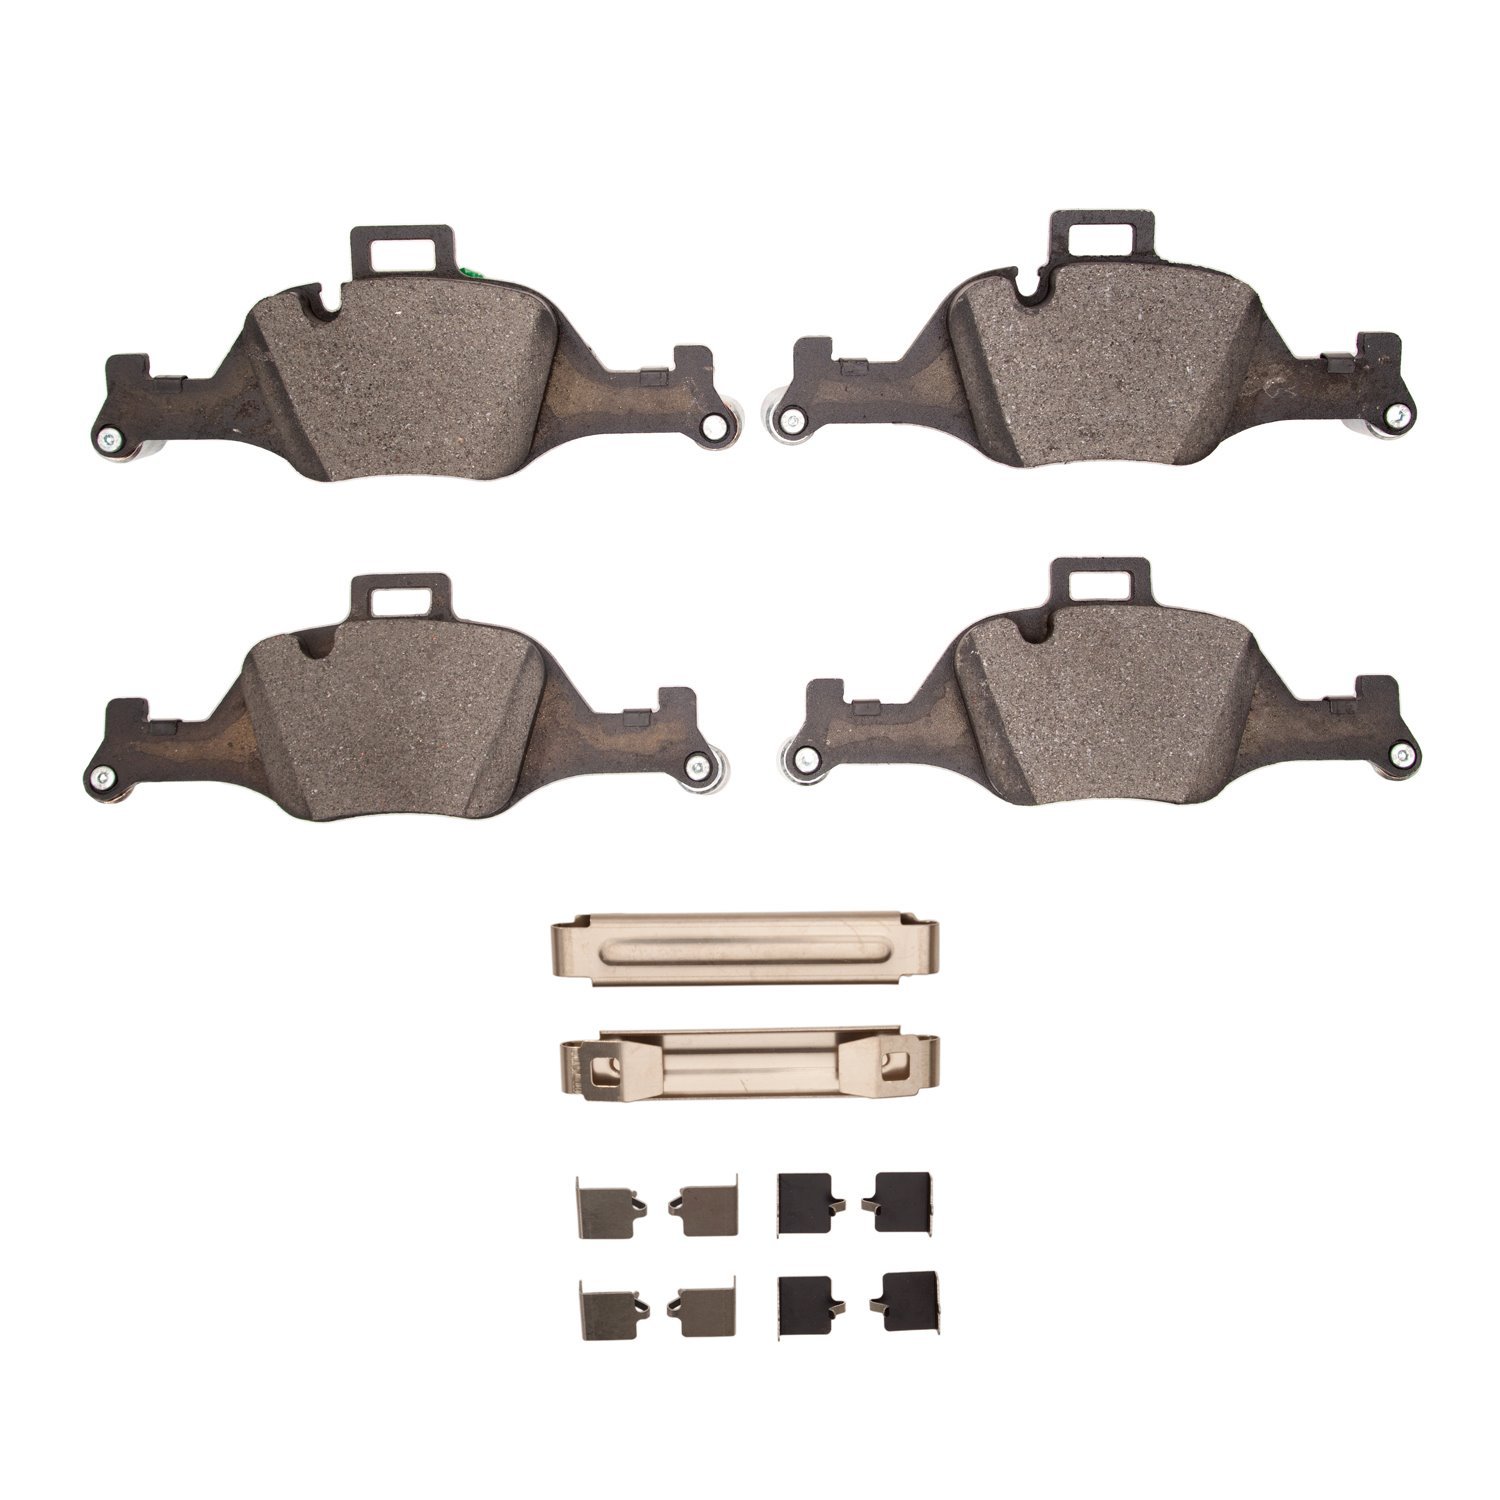 1600-2060-01 5000 Euro Ceramic Brake Pads & Hardware Kit, Fits Select BMW, Position: Front